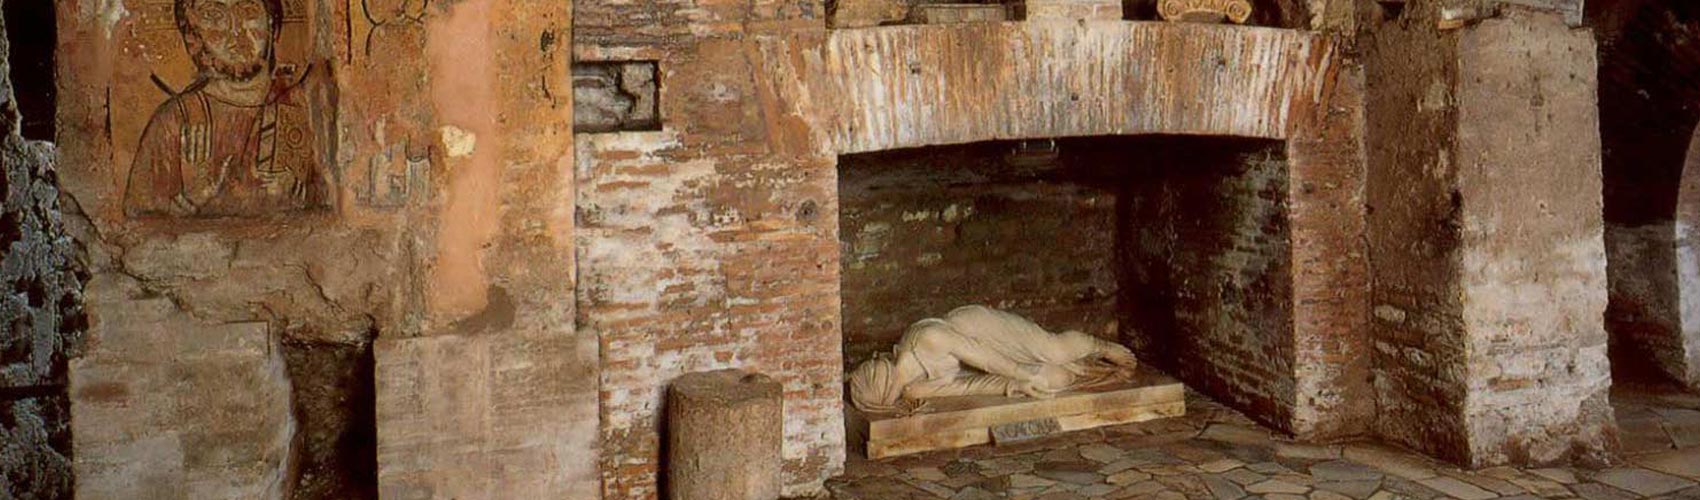 vatican crypt tour